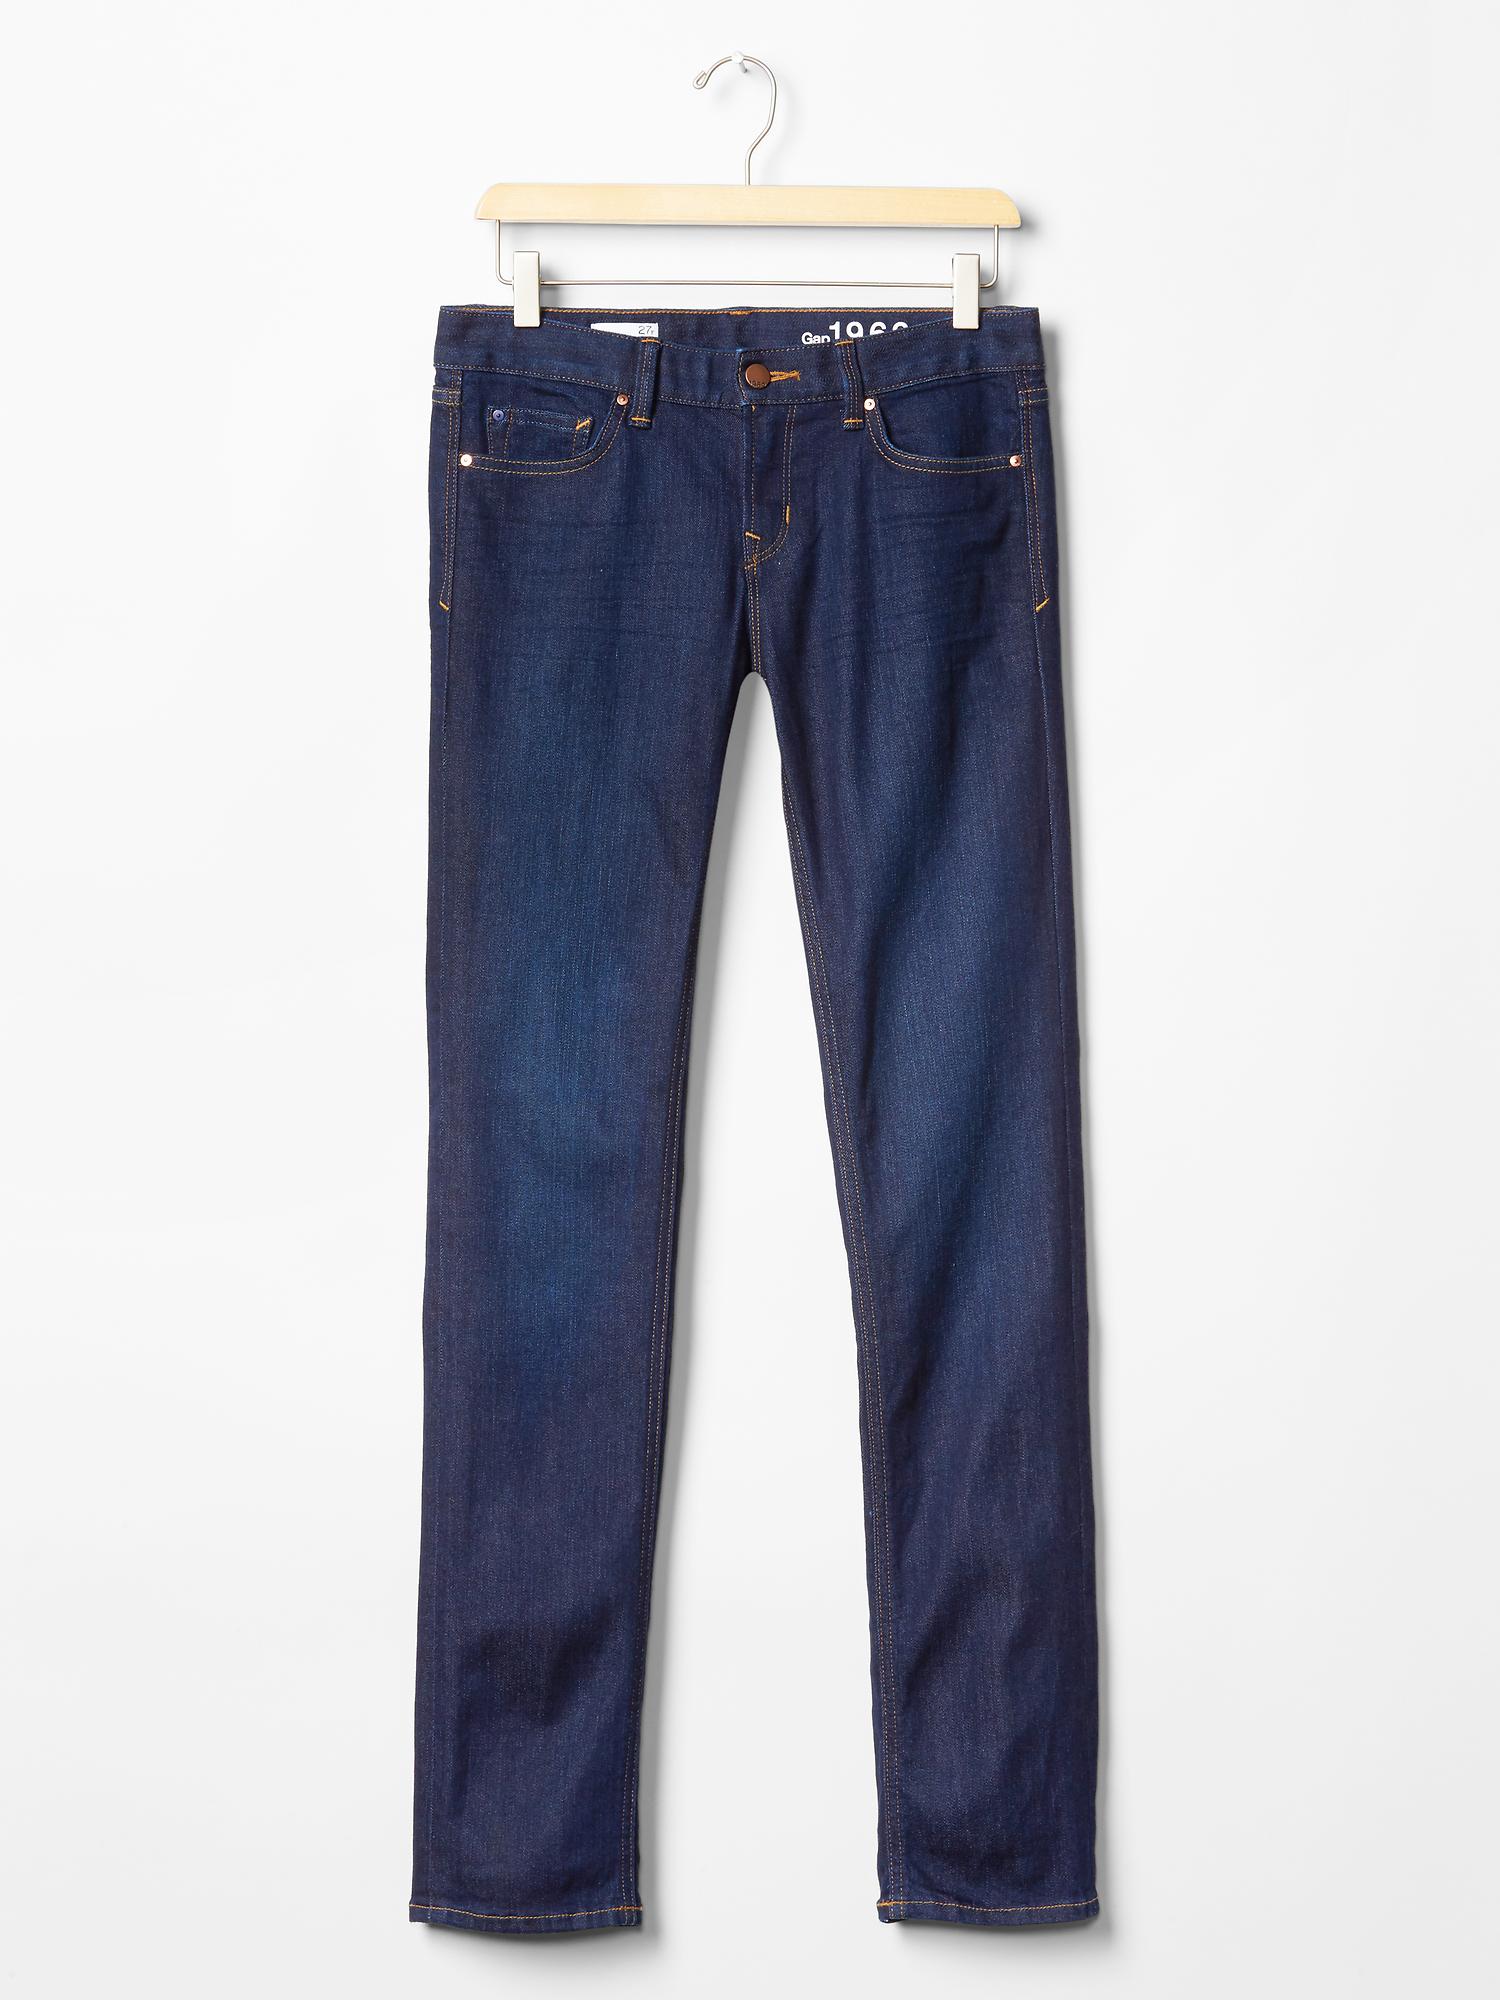 GAP, Jeans, Gap Blue Jeans Rn 5423